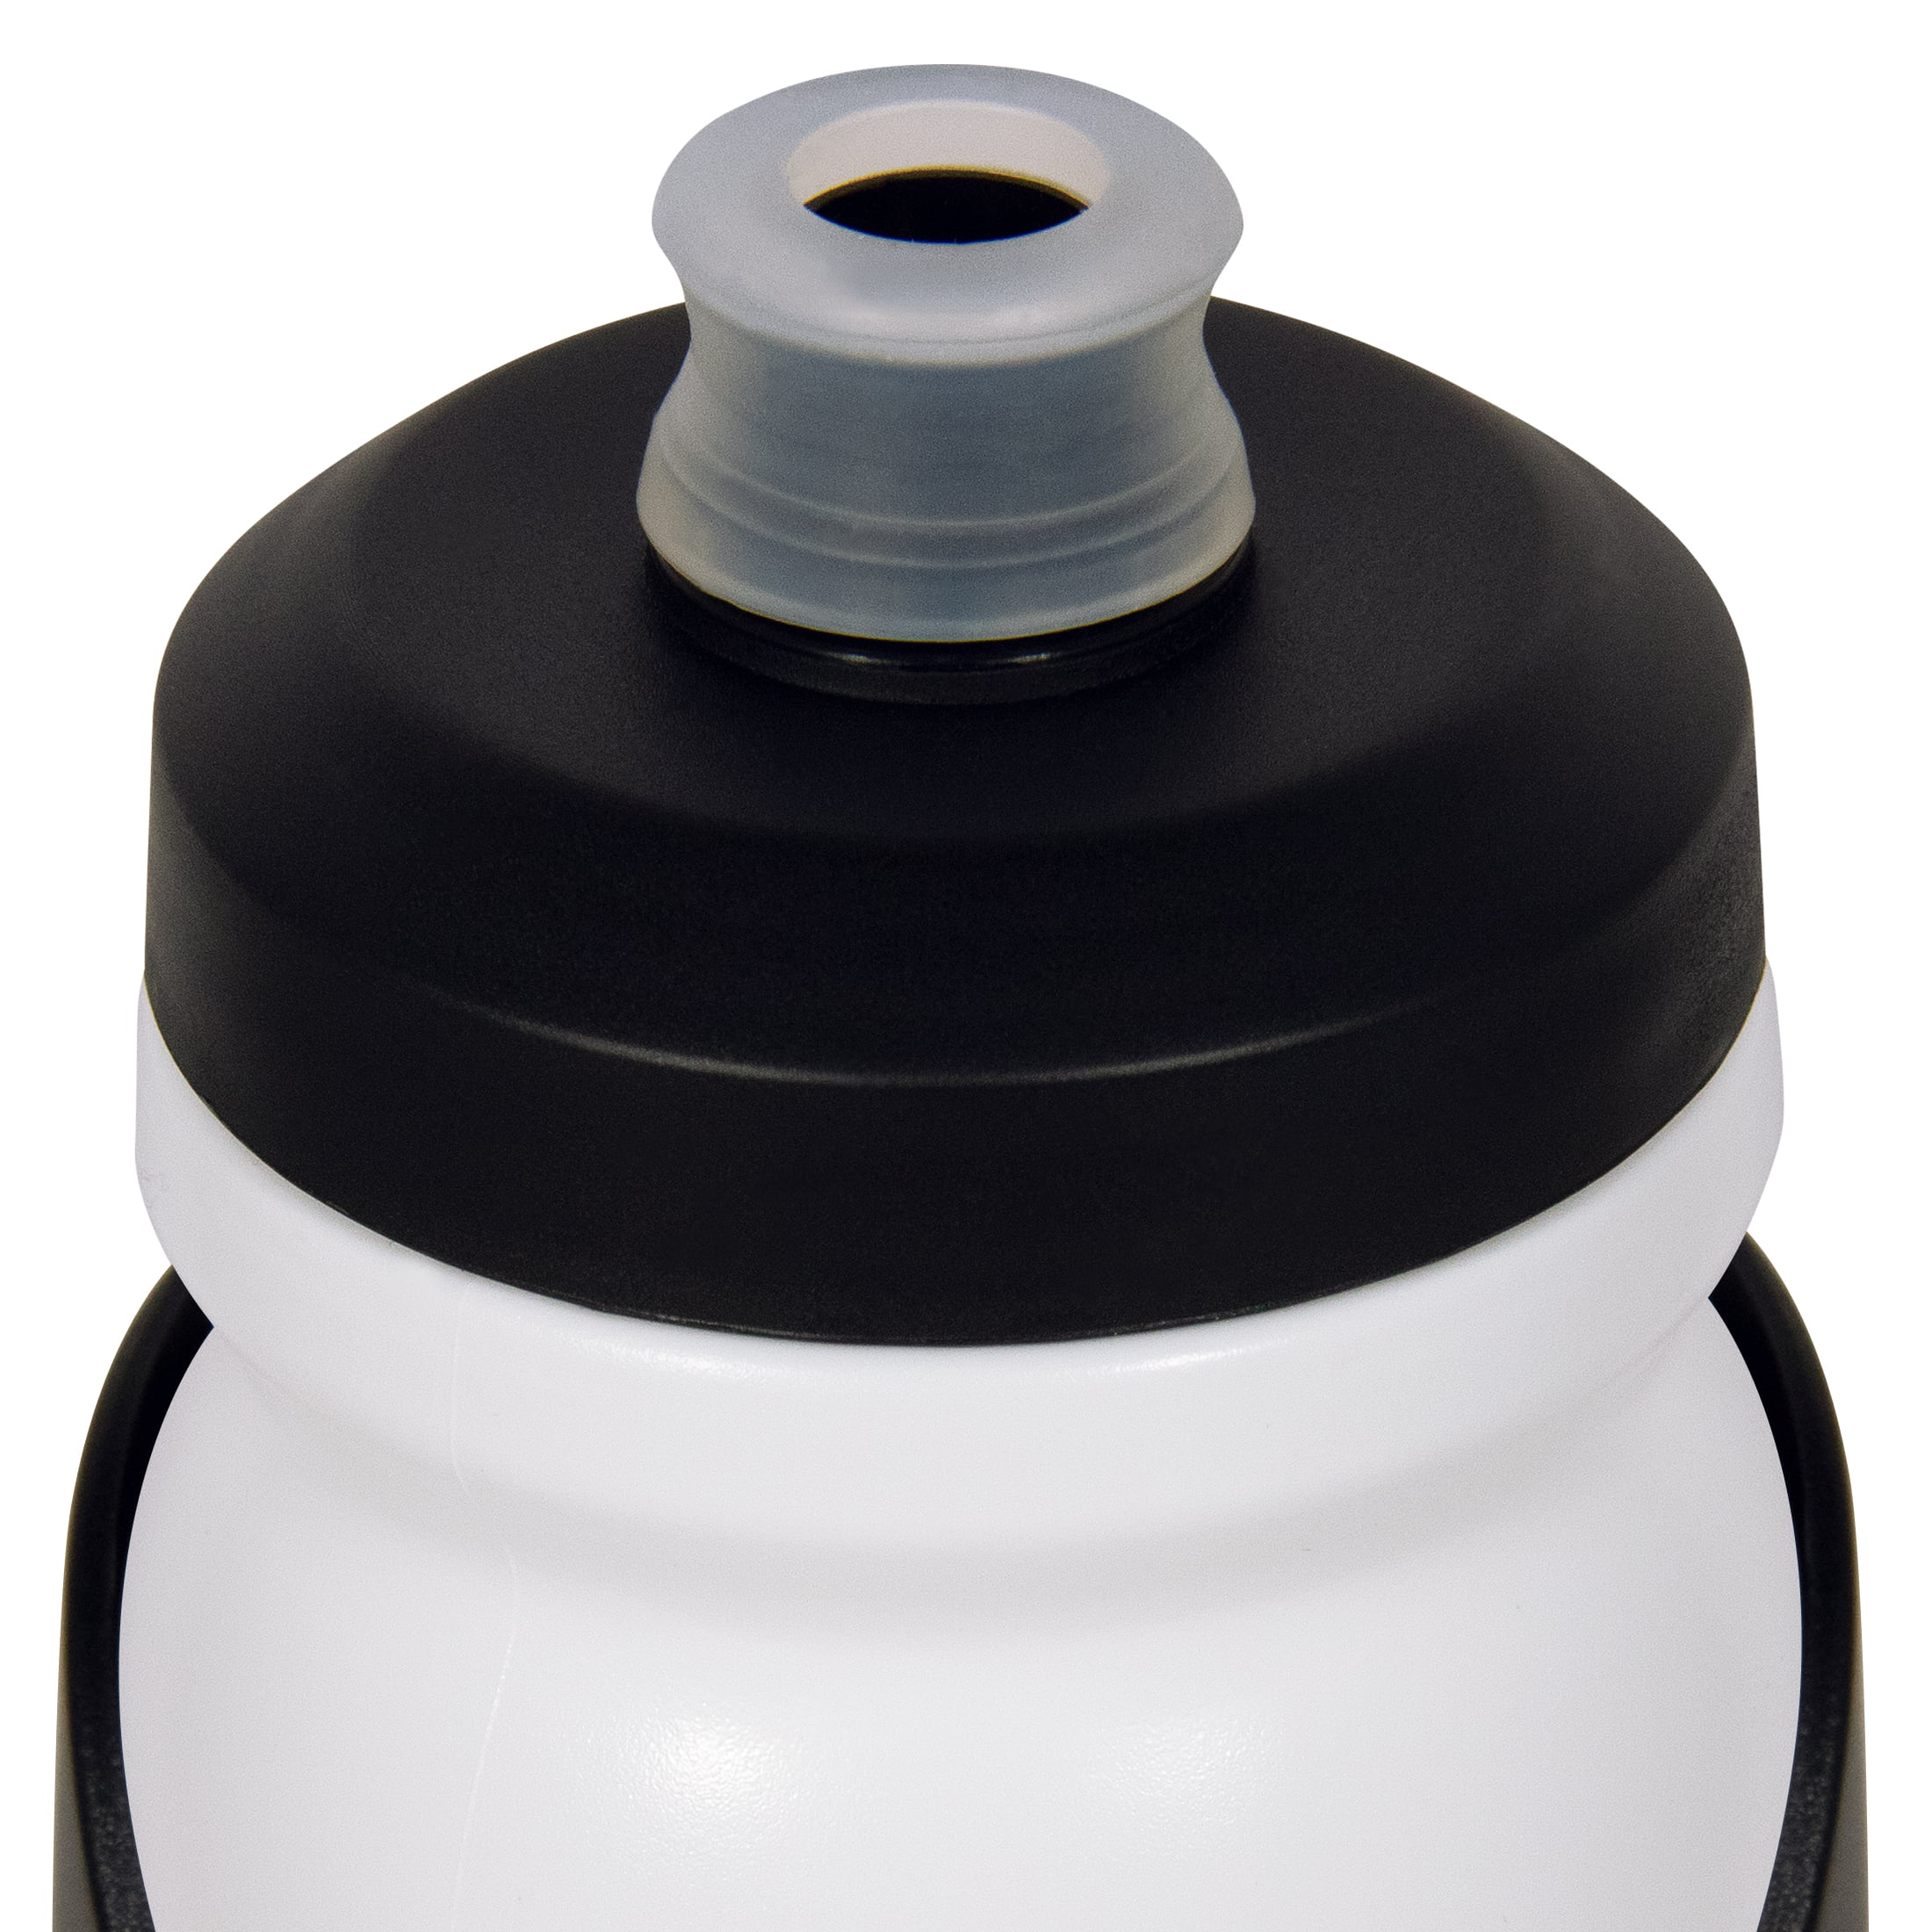 Soma Polypropylene Water Bottle – Mr. Bikes